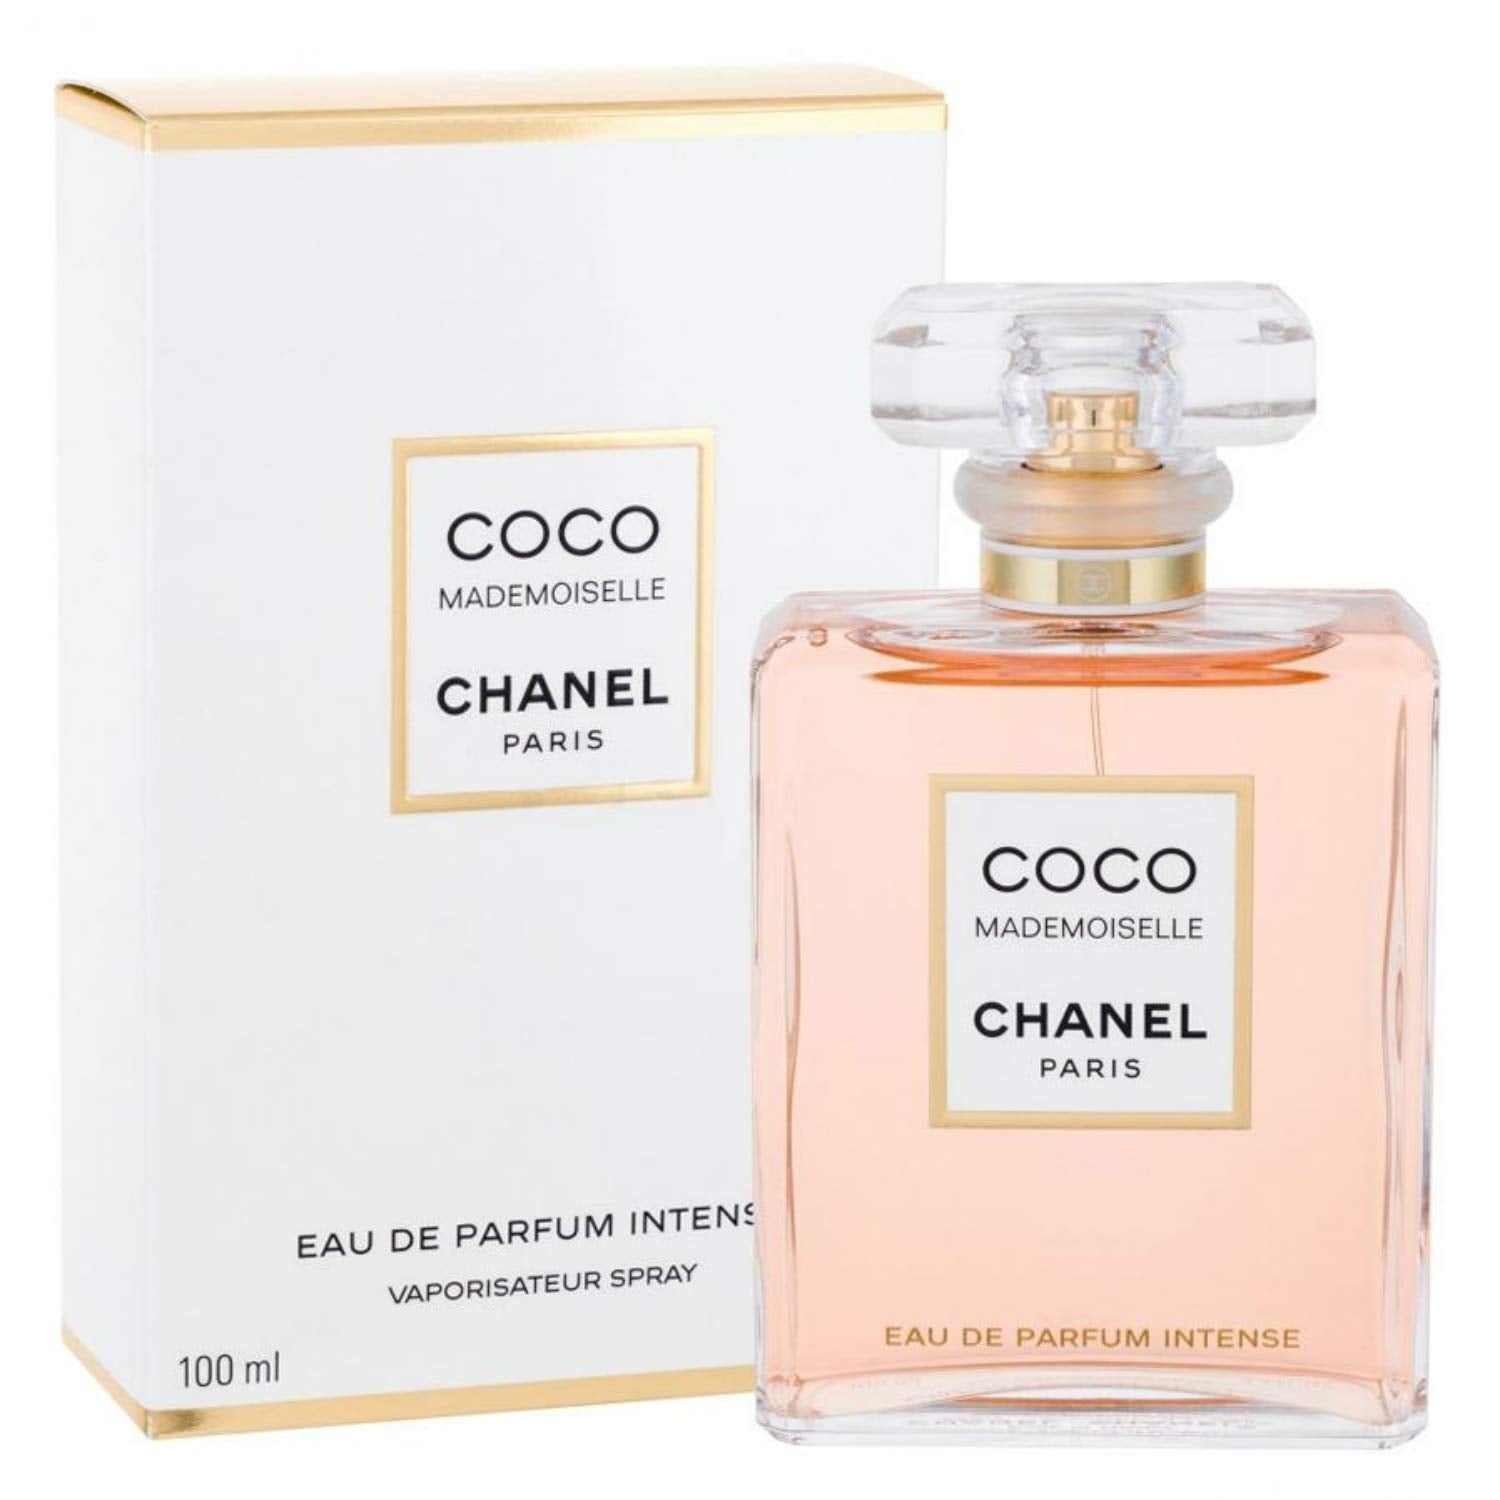 Coco Mademoiselle By Chanel For Women - Eau de Parfum Intense